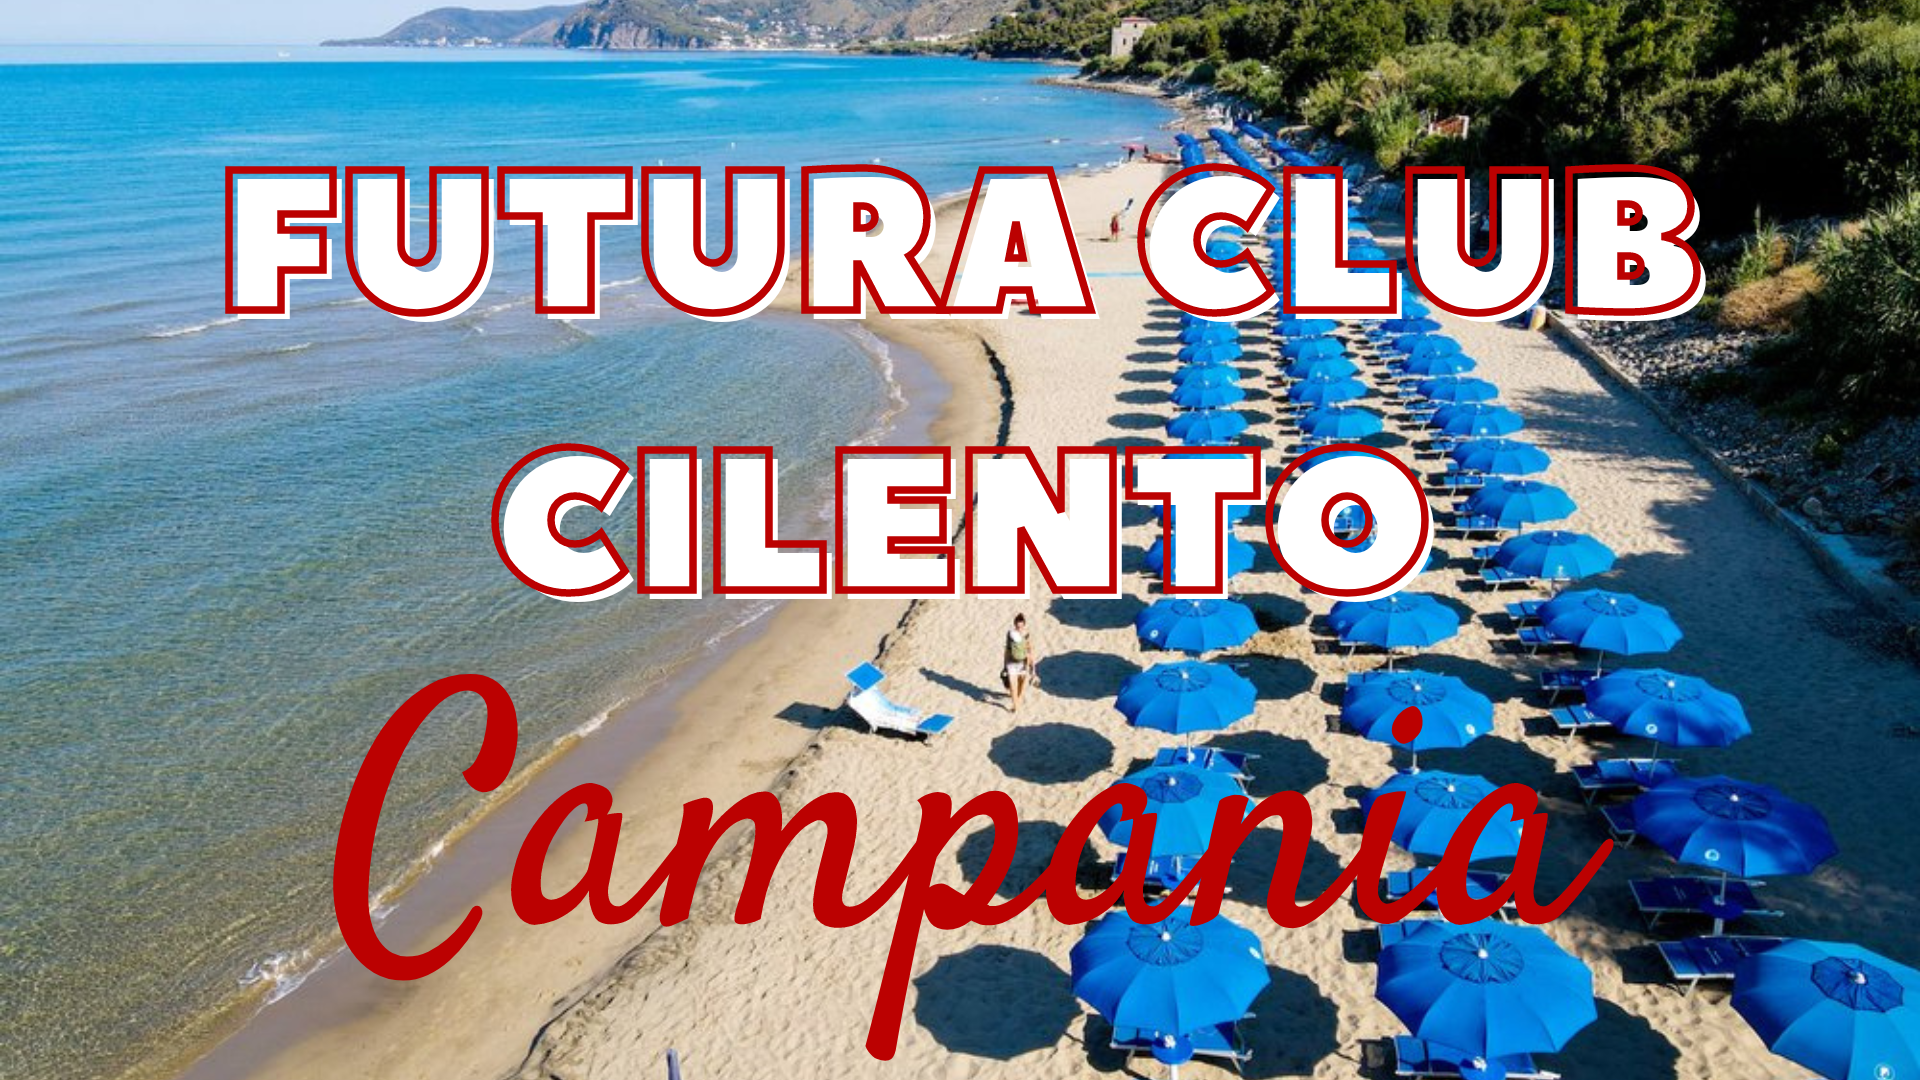 FUTURA CLUB CILENTO - CAMPANIA